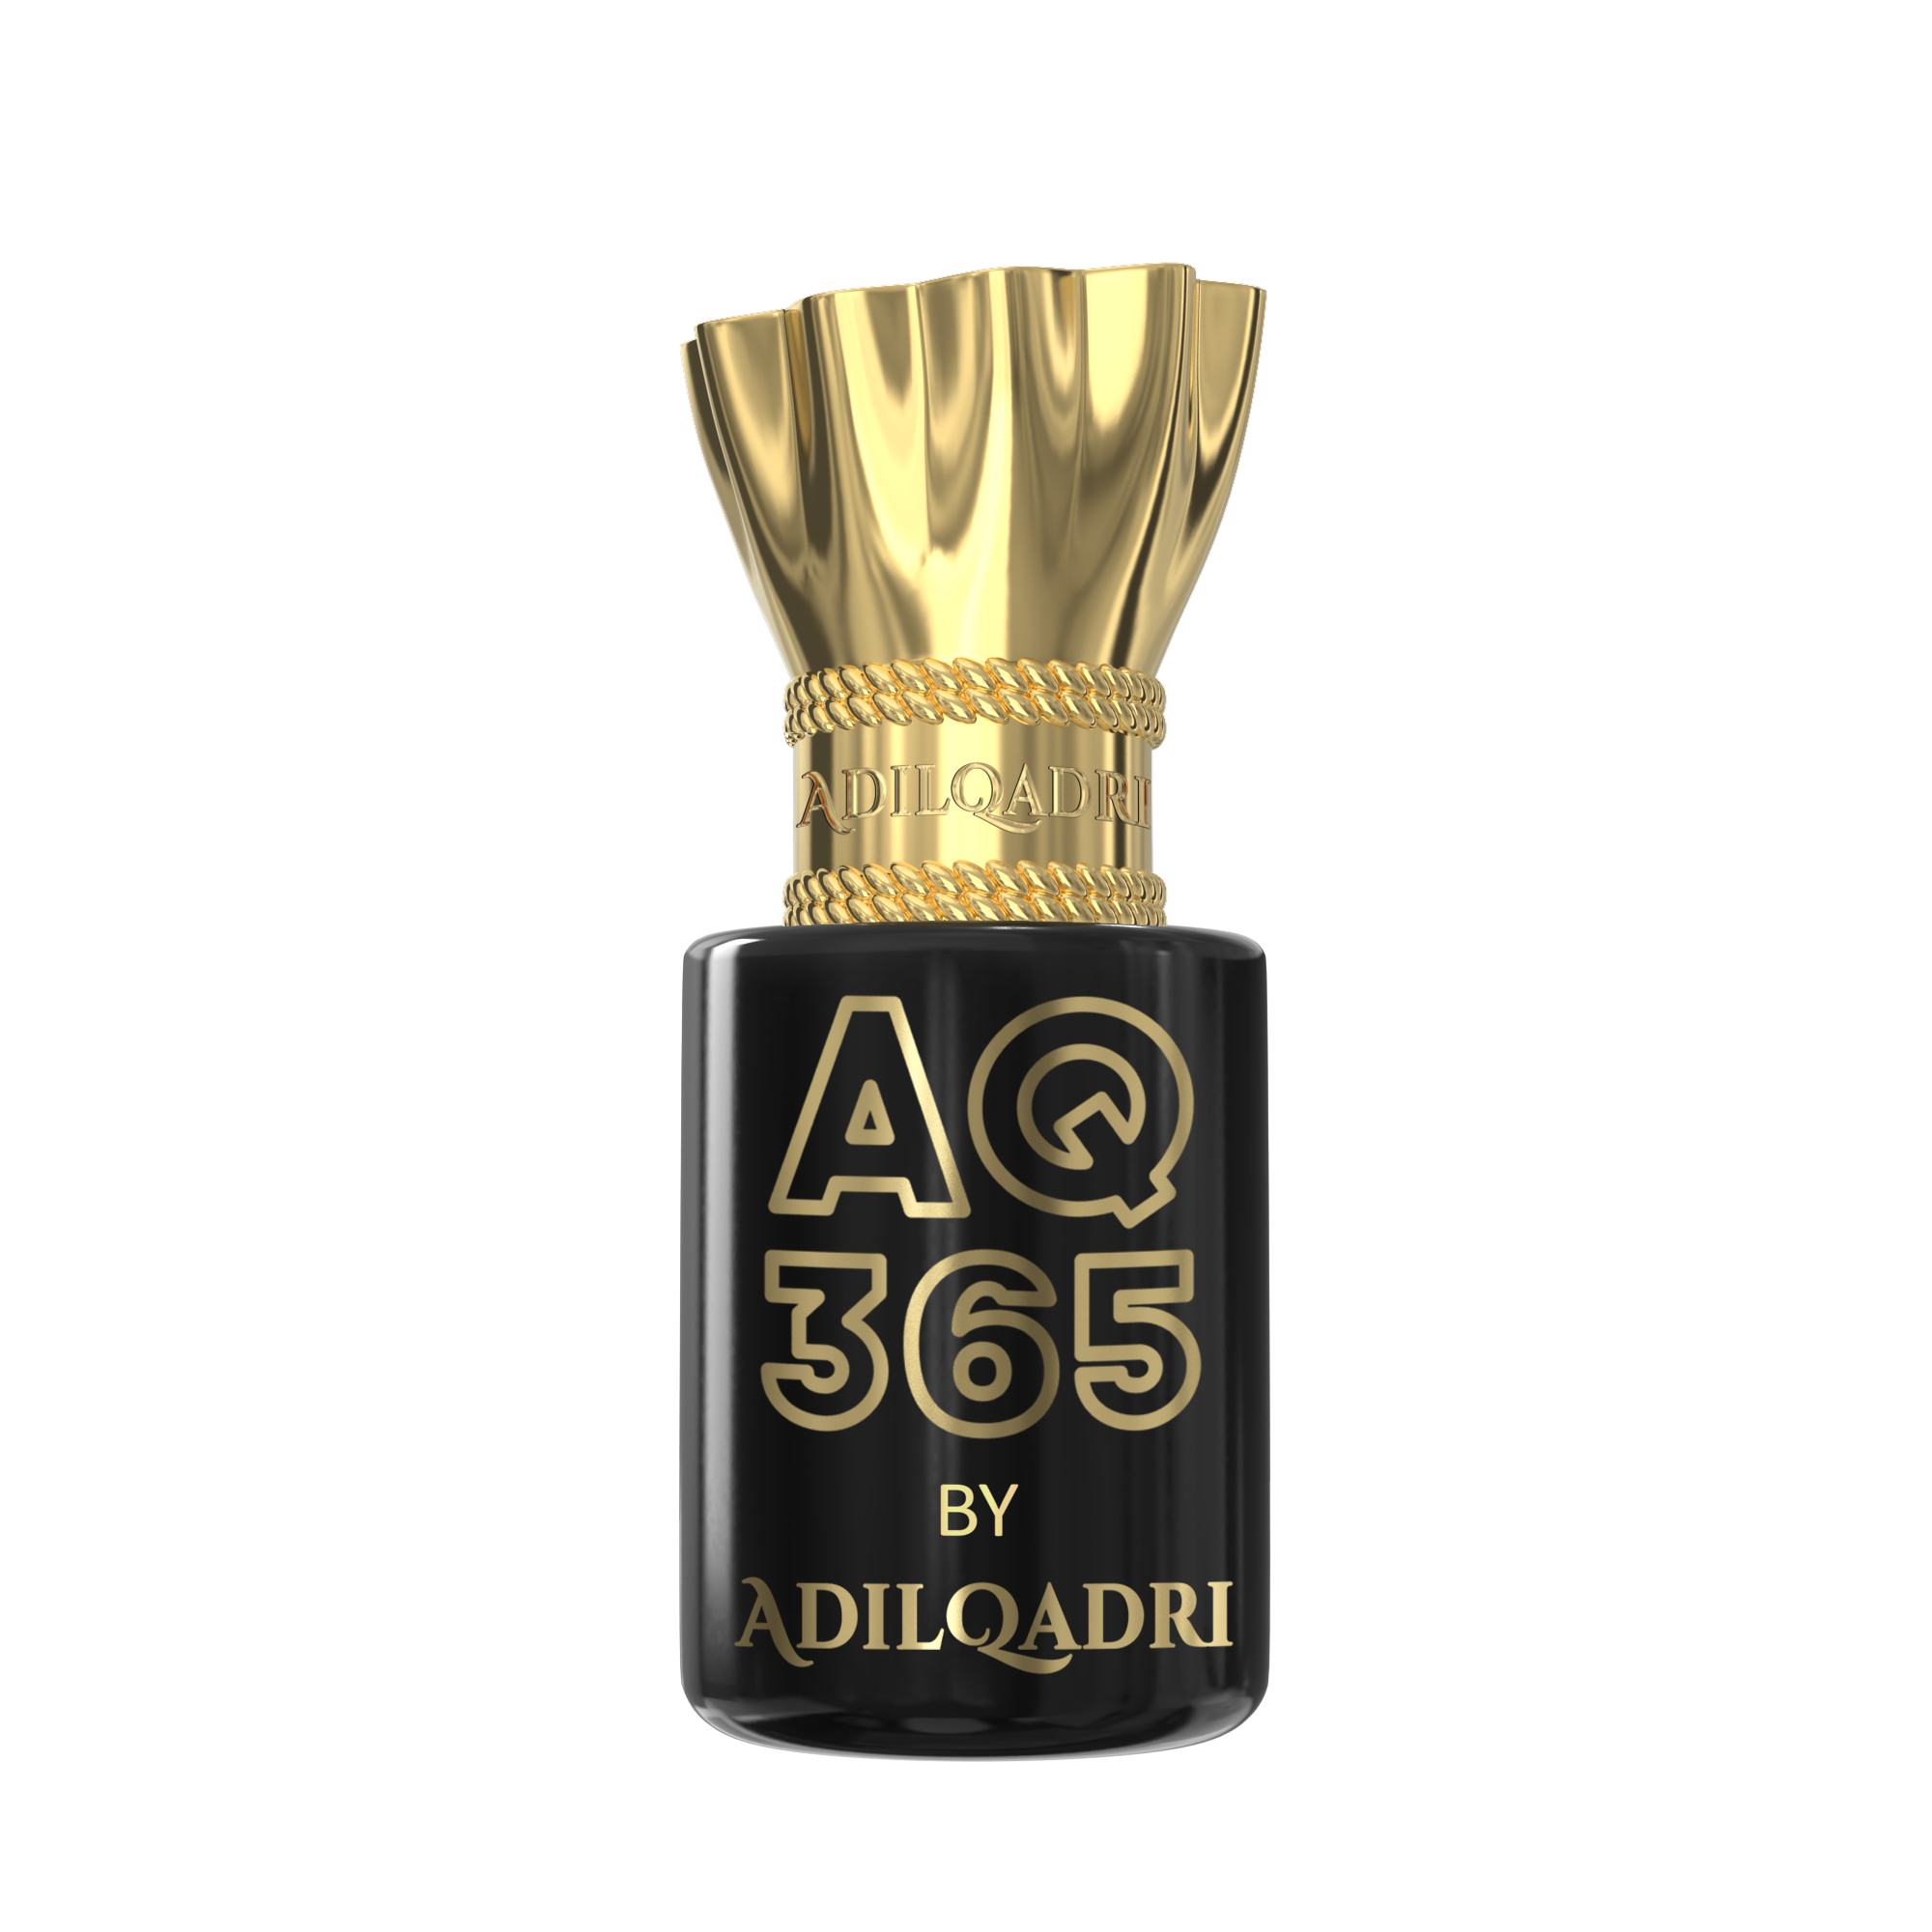 AQ 365 Luxury Attar Perfume 5.5 ML